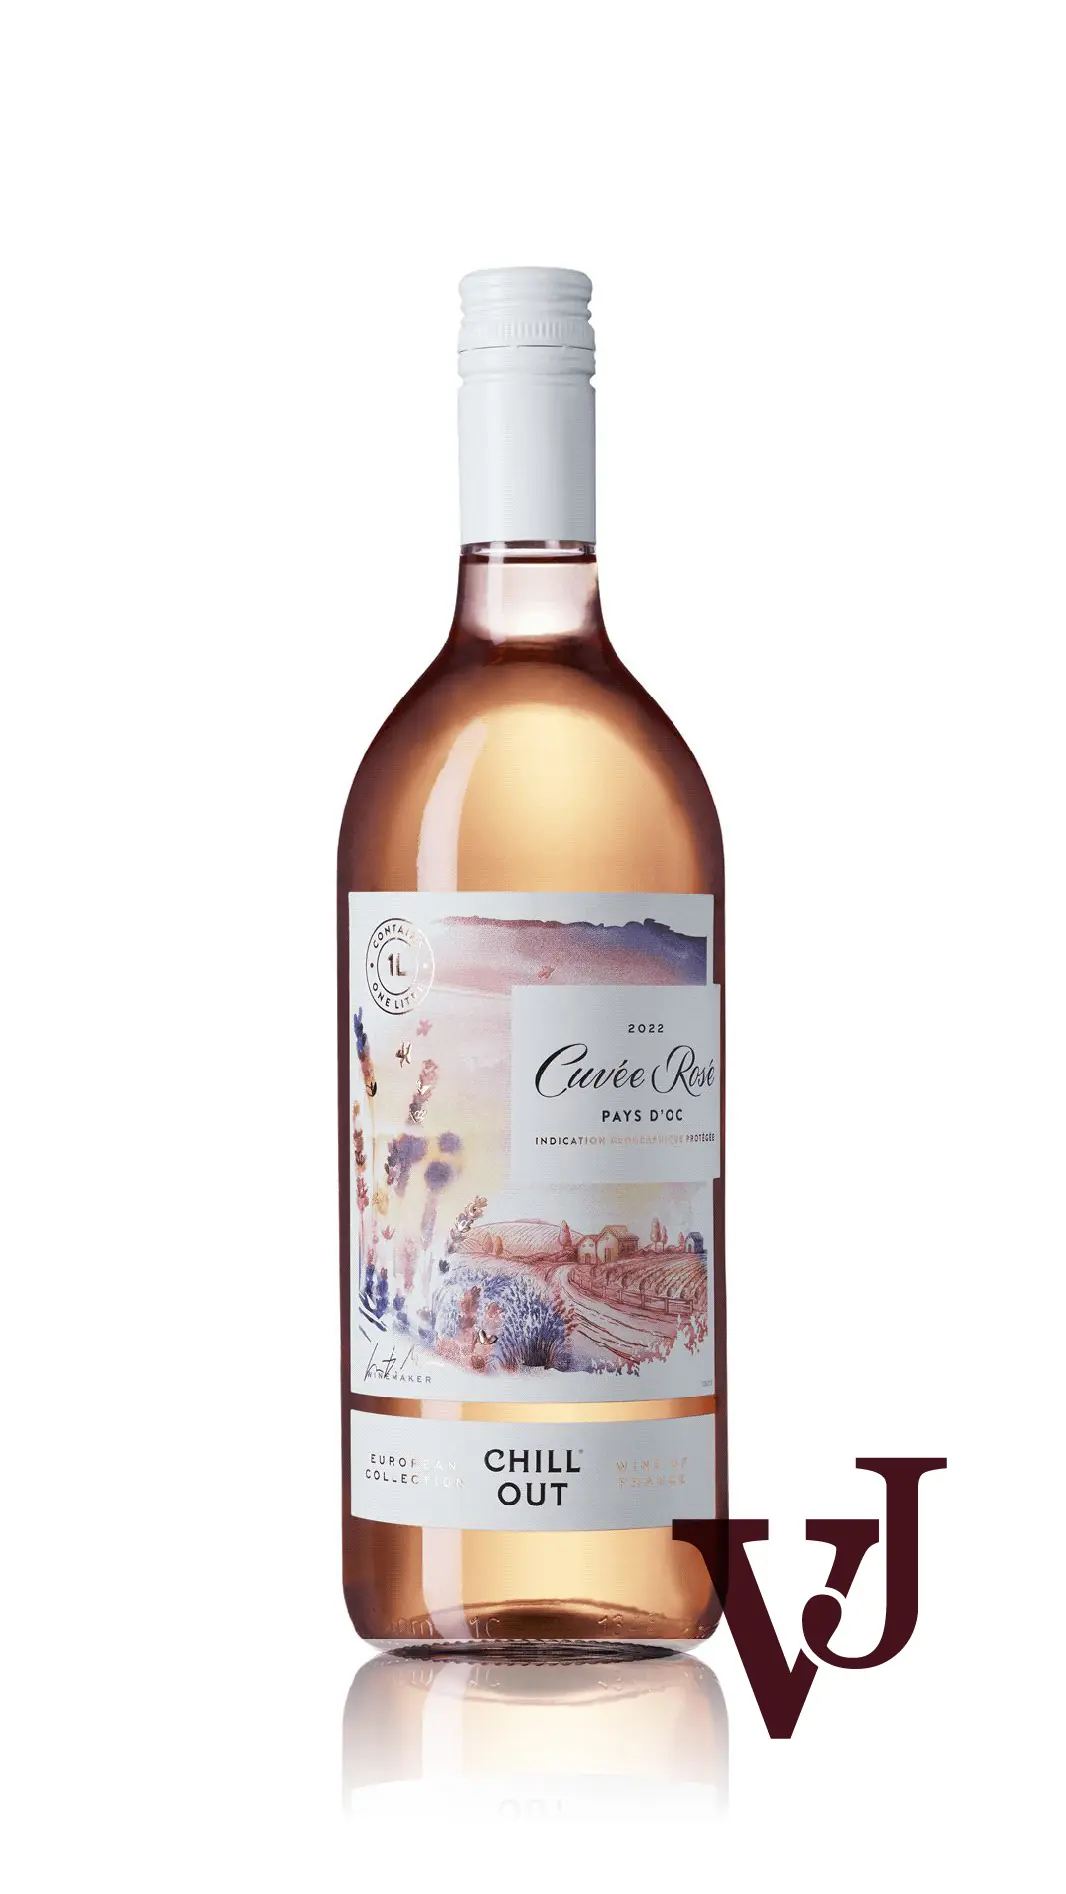 Rosé Vin - CHILL OUT artikel nummer 5638301 från producenten Anora Group PLC från området Frankrike - Vinjournalen.se